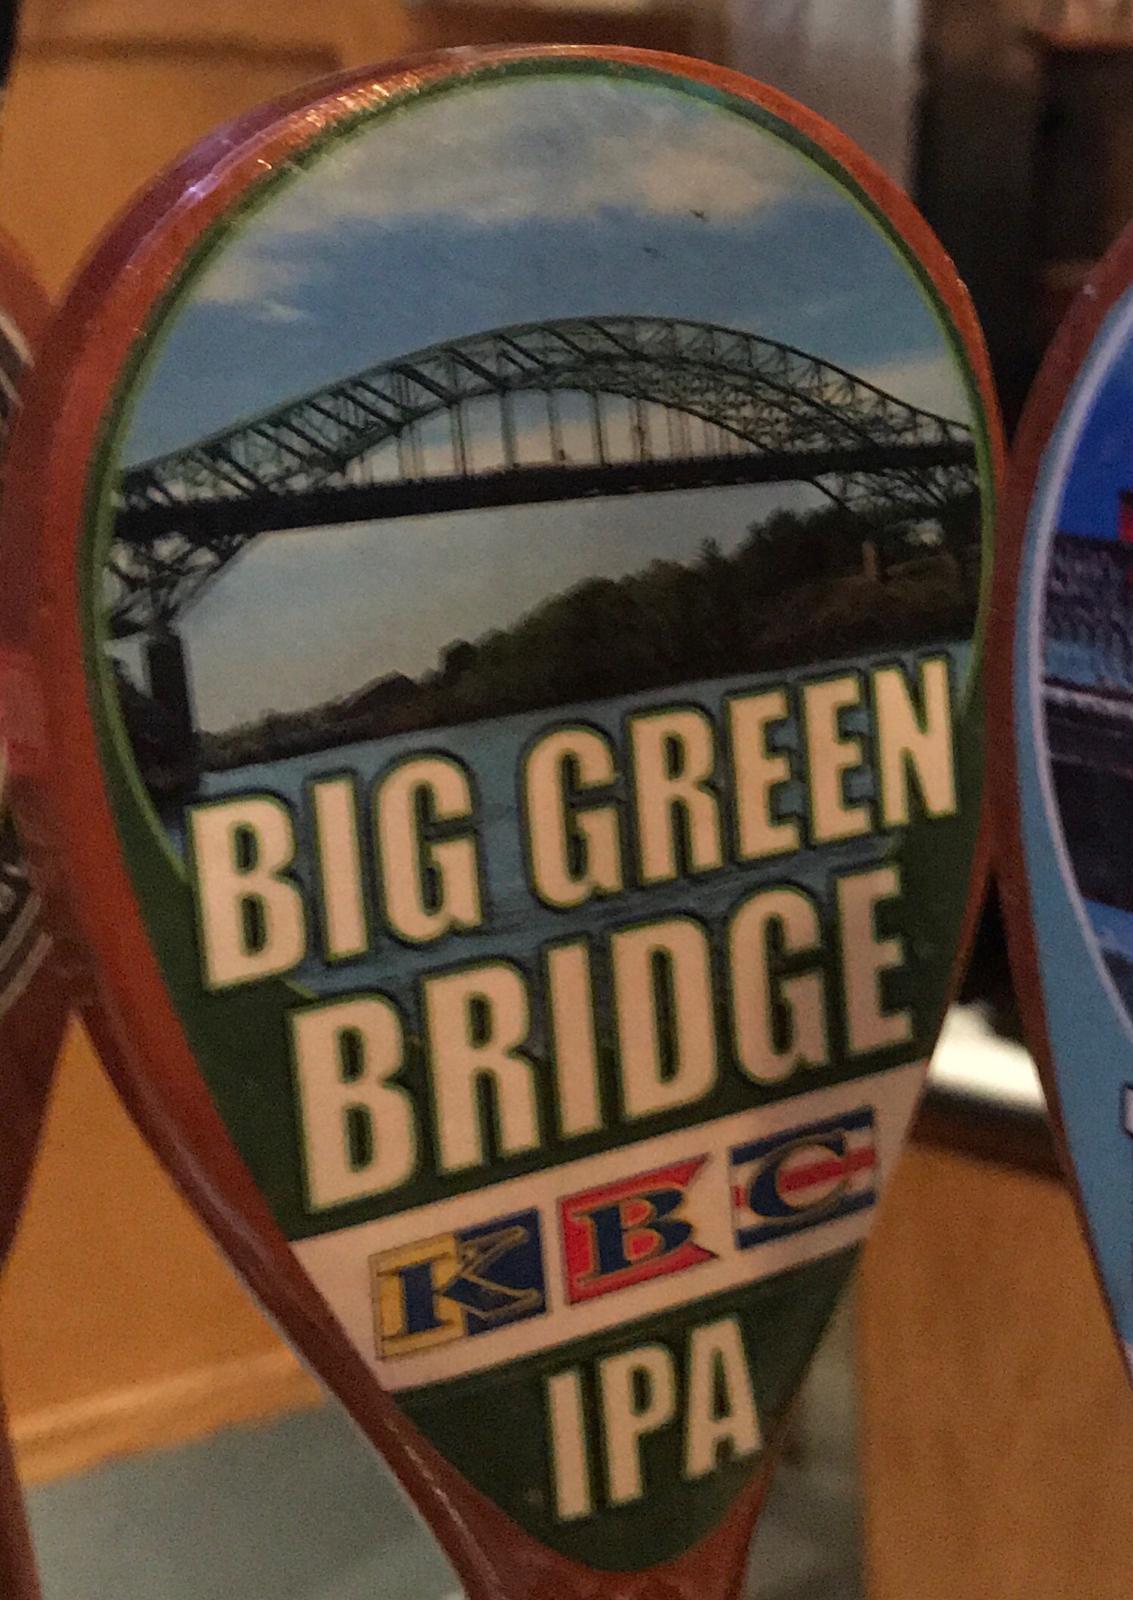 Big Green Bridge IPA